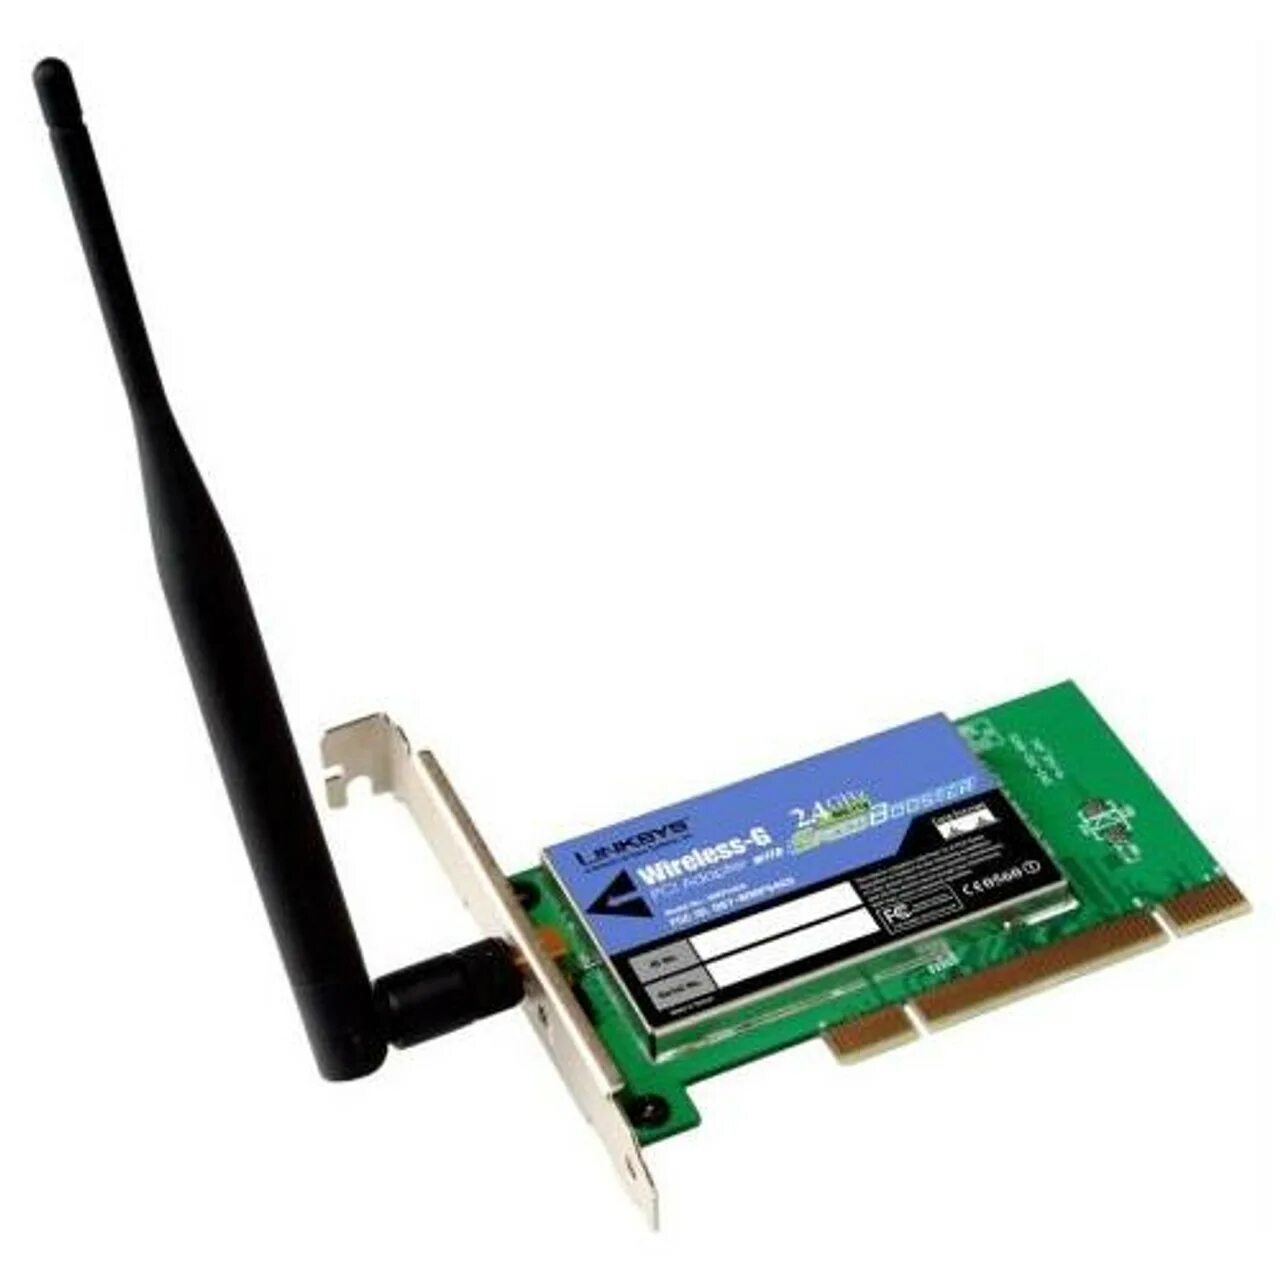 Linksys wmp54g v4.1 Wireless-g PCI Adapter. Wi-Fi адаптер Linksys wga54g. Broadcom 802.11g Network Adapter. Wi-Fi адаптер Linksys wusb600n. Сетевая карта lan